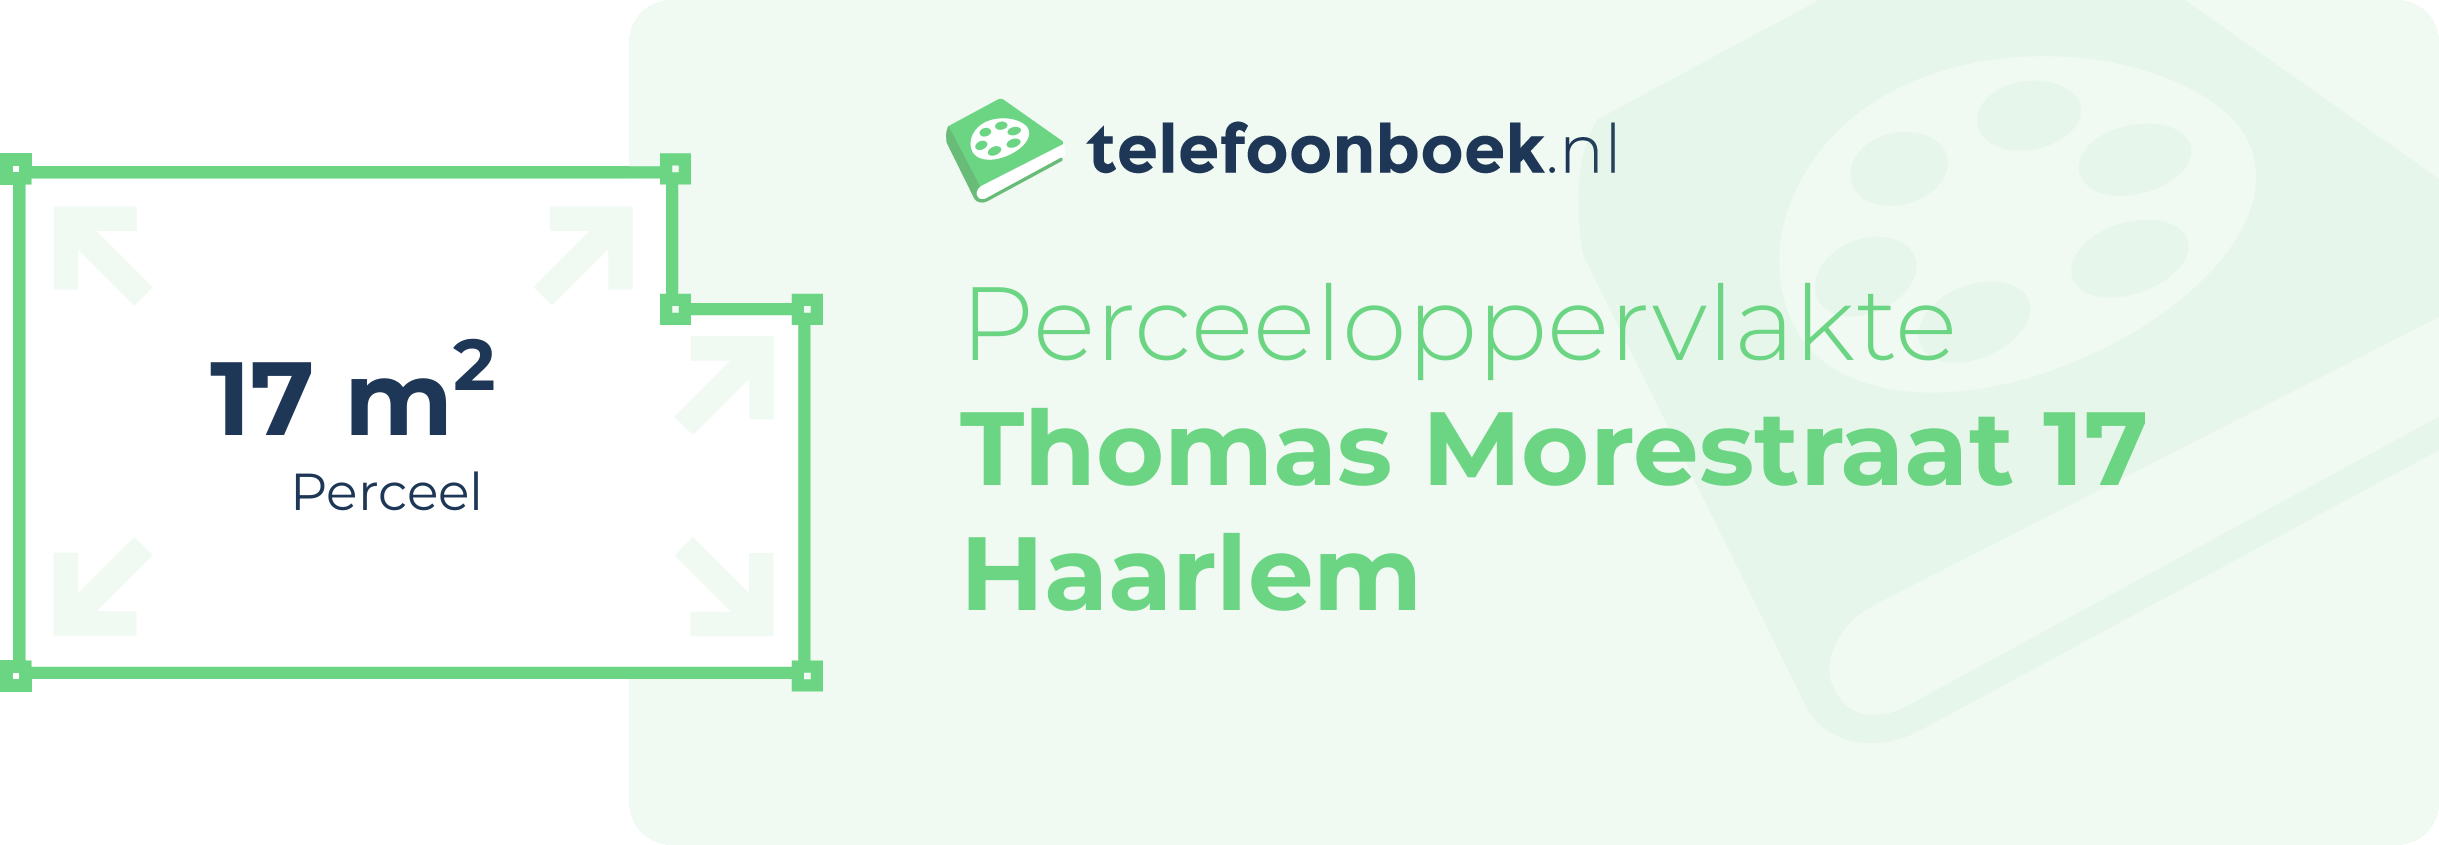 Perceeloppervlakte Thomas Morestraat 17 Haarlem